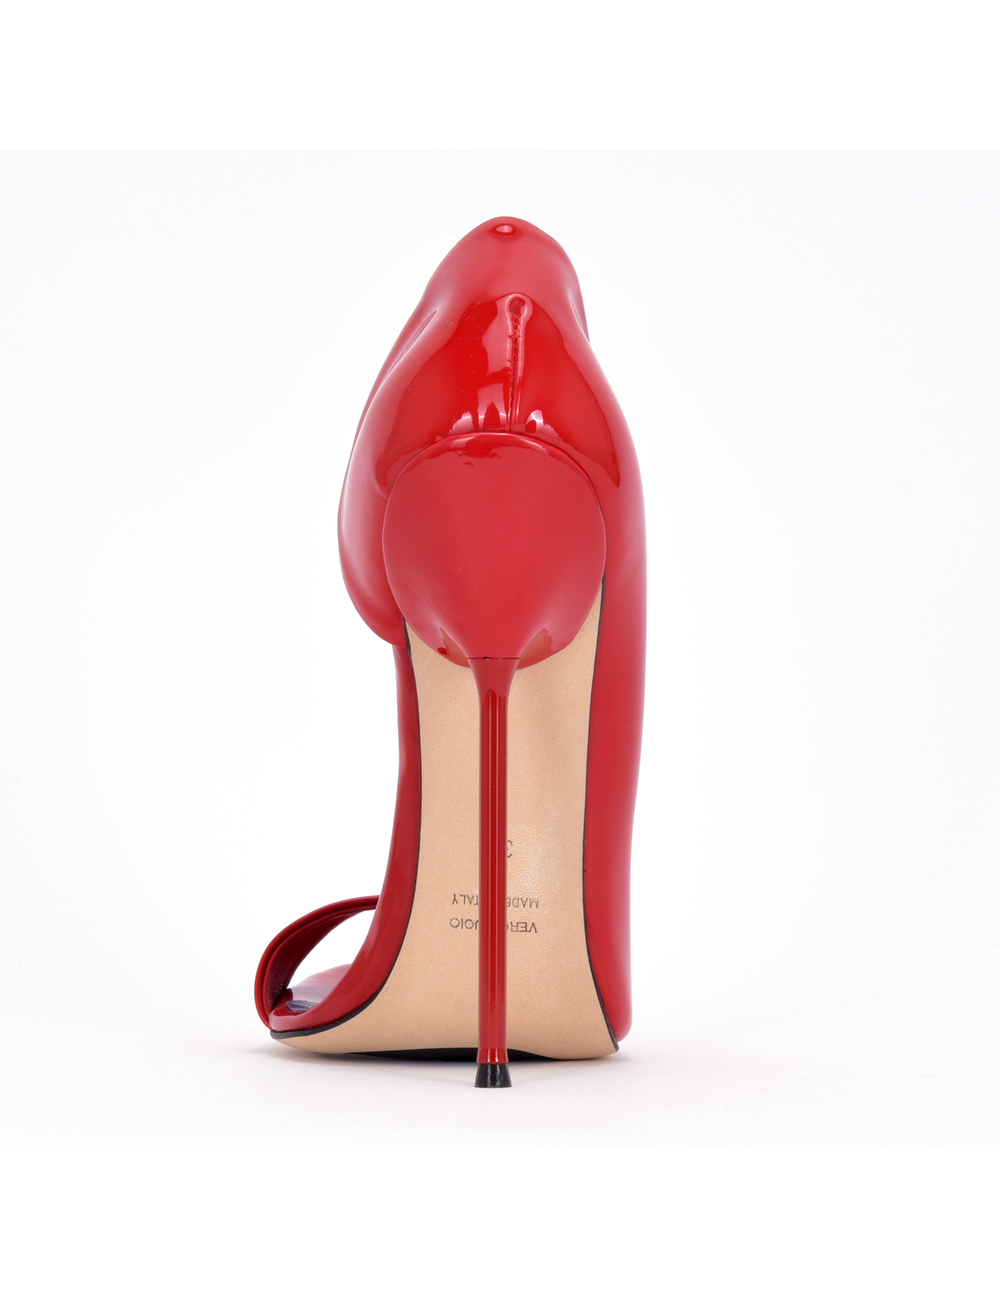 Sanctum Italian sandals MONICA red shiny with metal heels with purple inlay